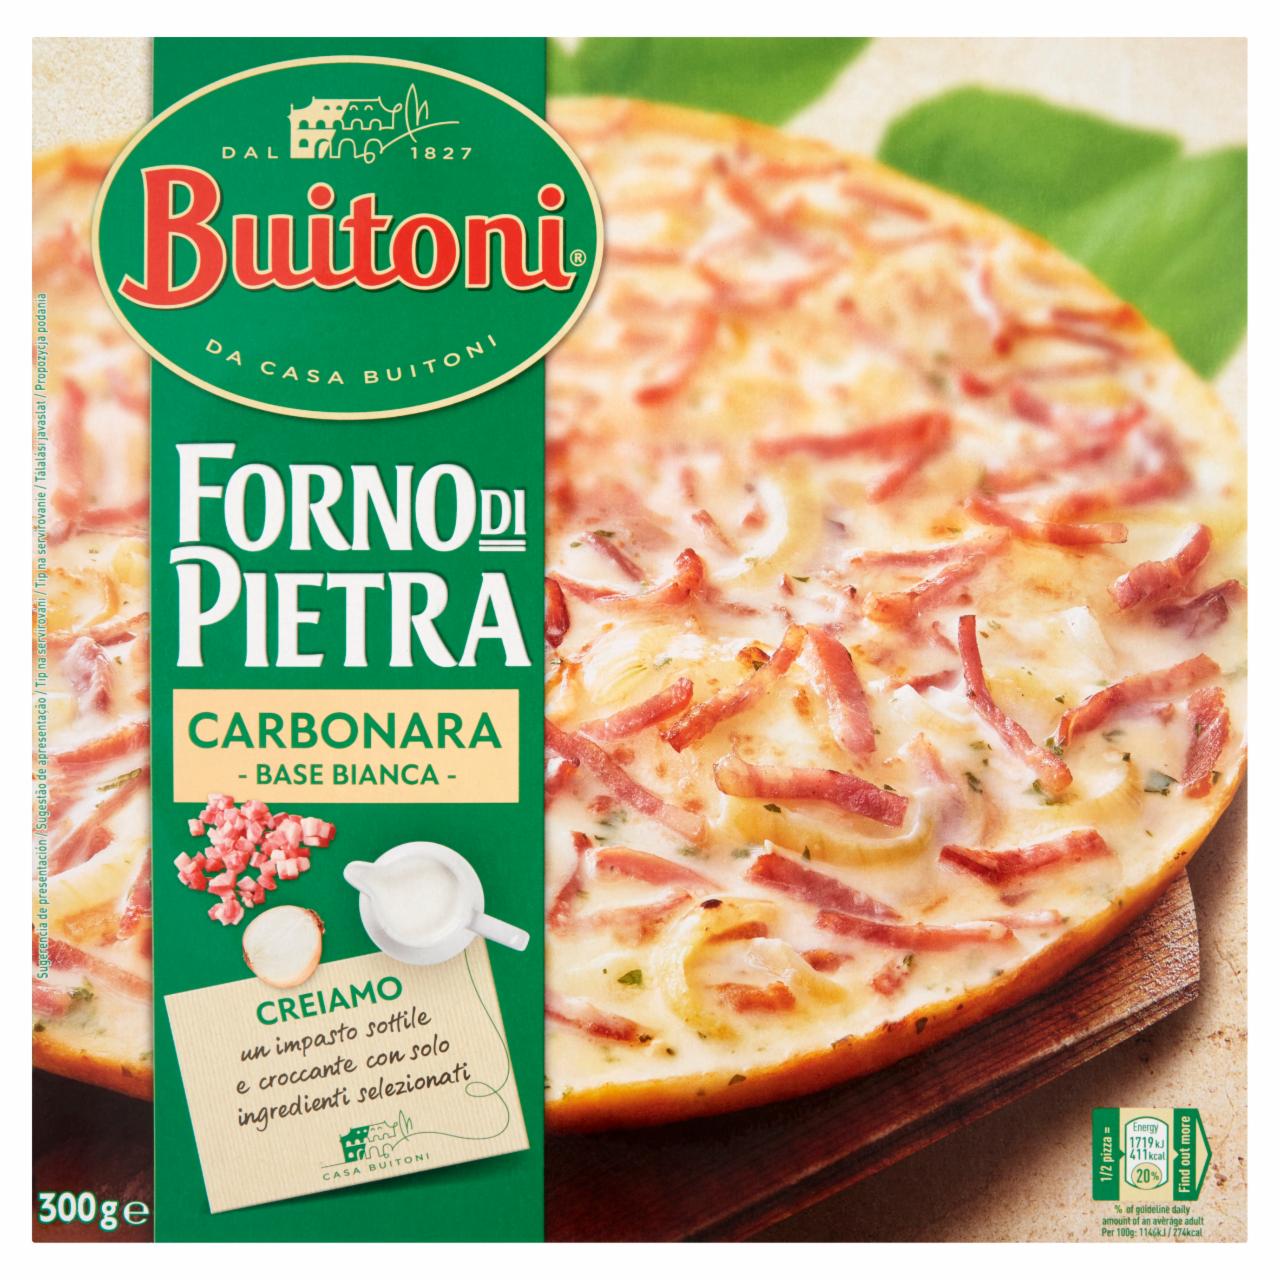 Képek - Buitoni Forno di Pietra gyorsfagyasztott Carbonara pizza 300 g